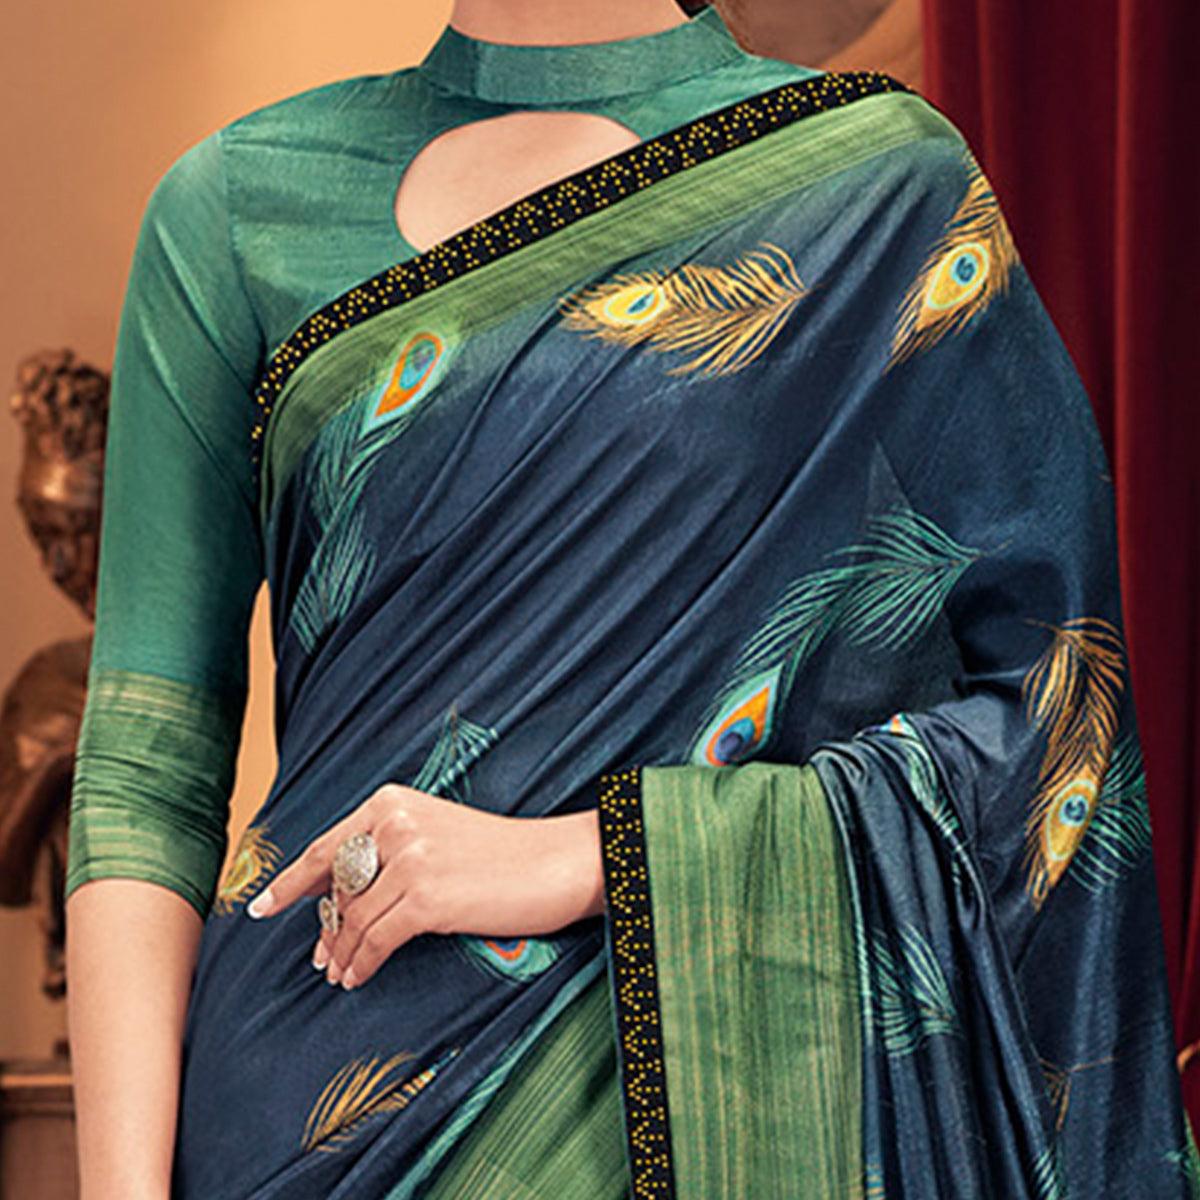 Blissful Blue-Green Colored Festive Wear Printed And Woven Border Silk Saree - Peachmode